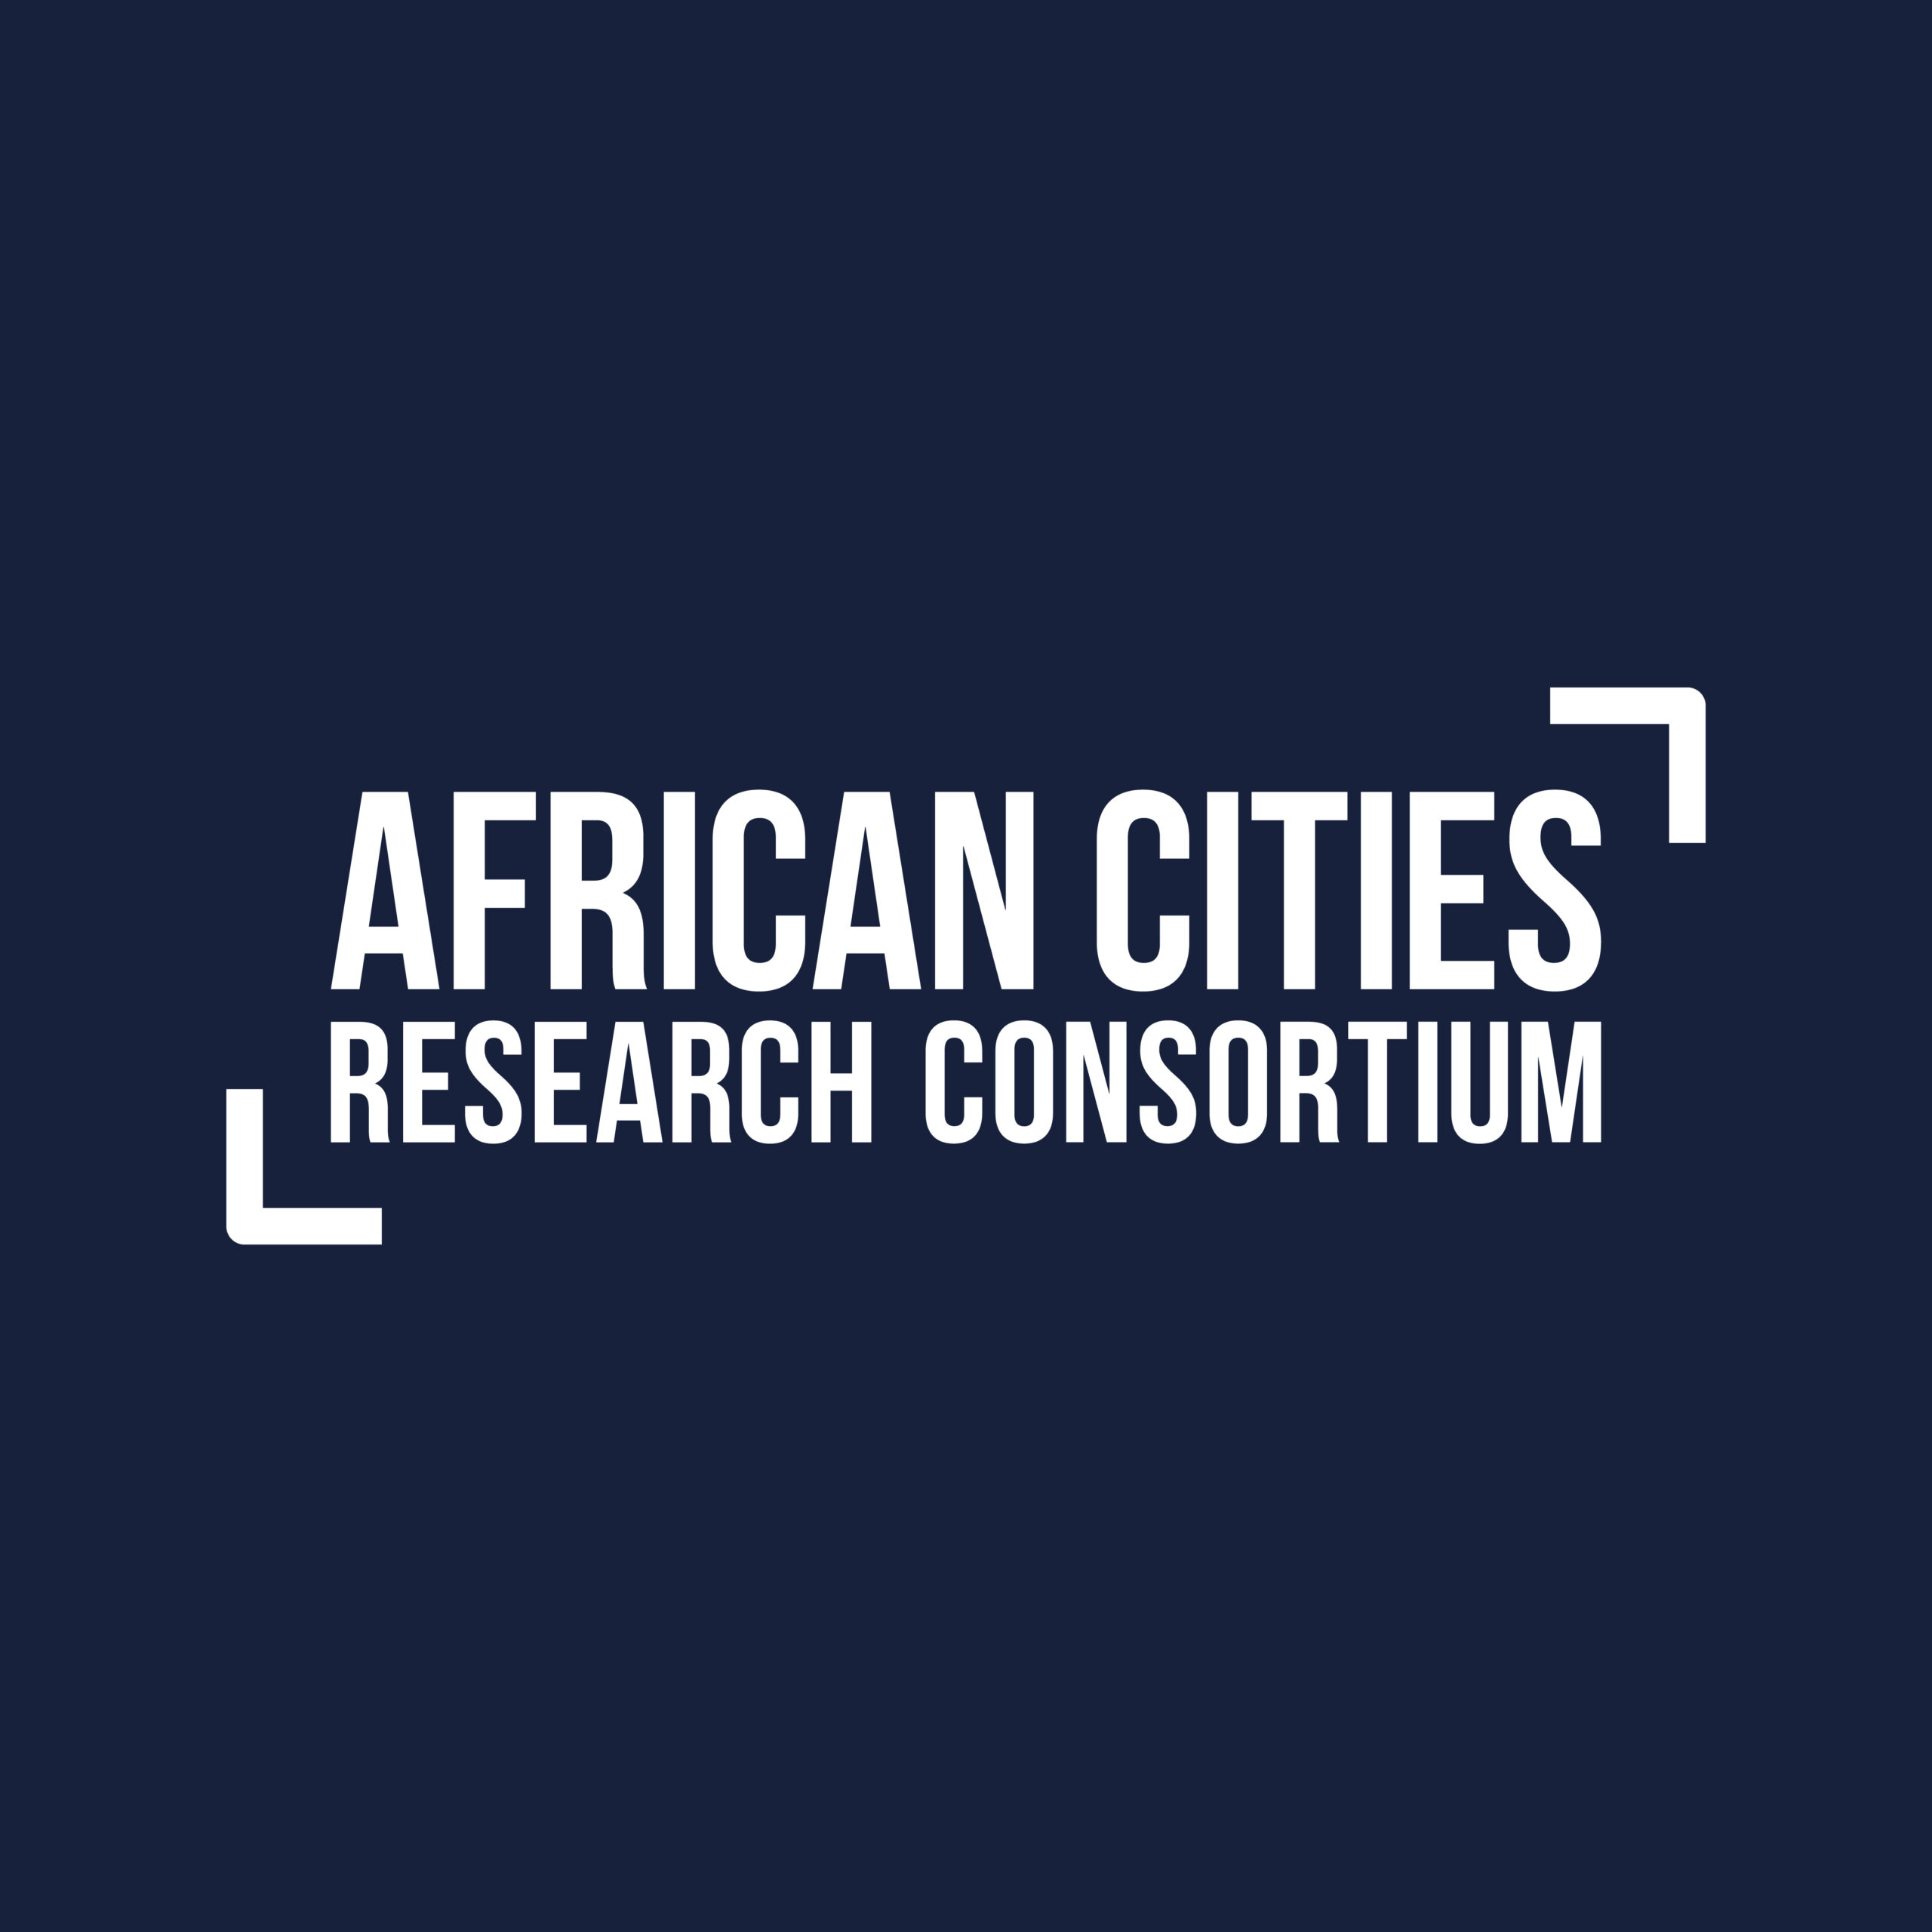 African Cities Research Consortium